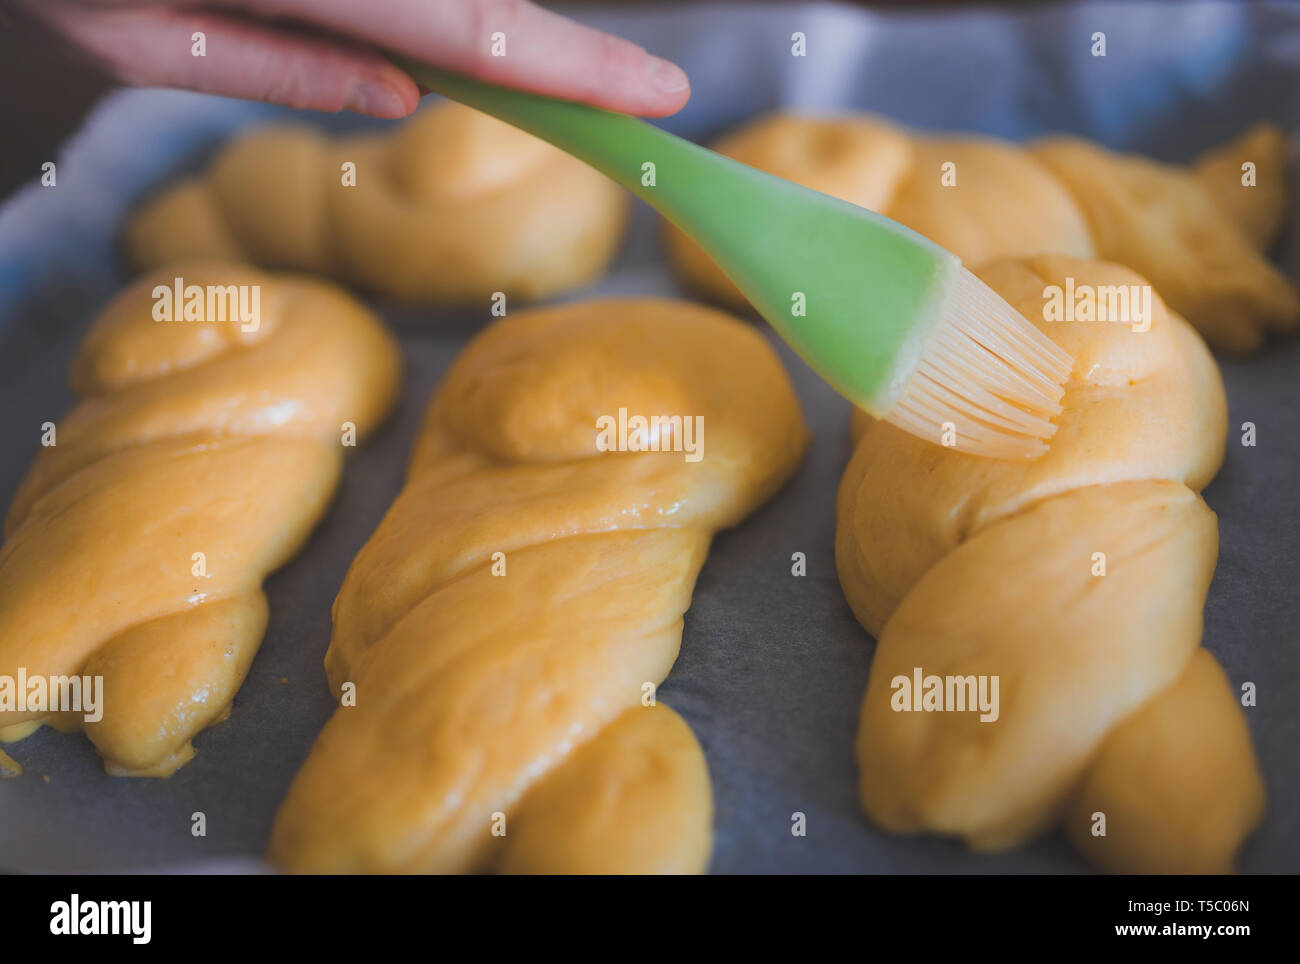 close-up of hand glazing braided sweet yeast bunns using silicone pastry brush before baking Stock Photo